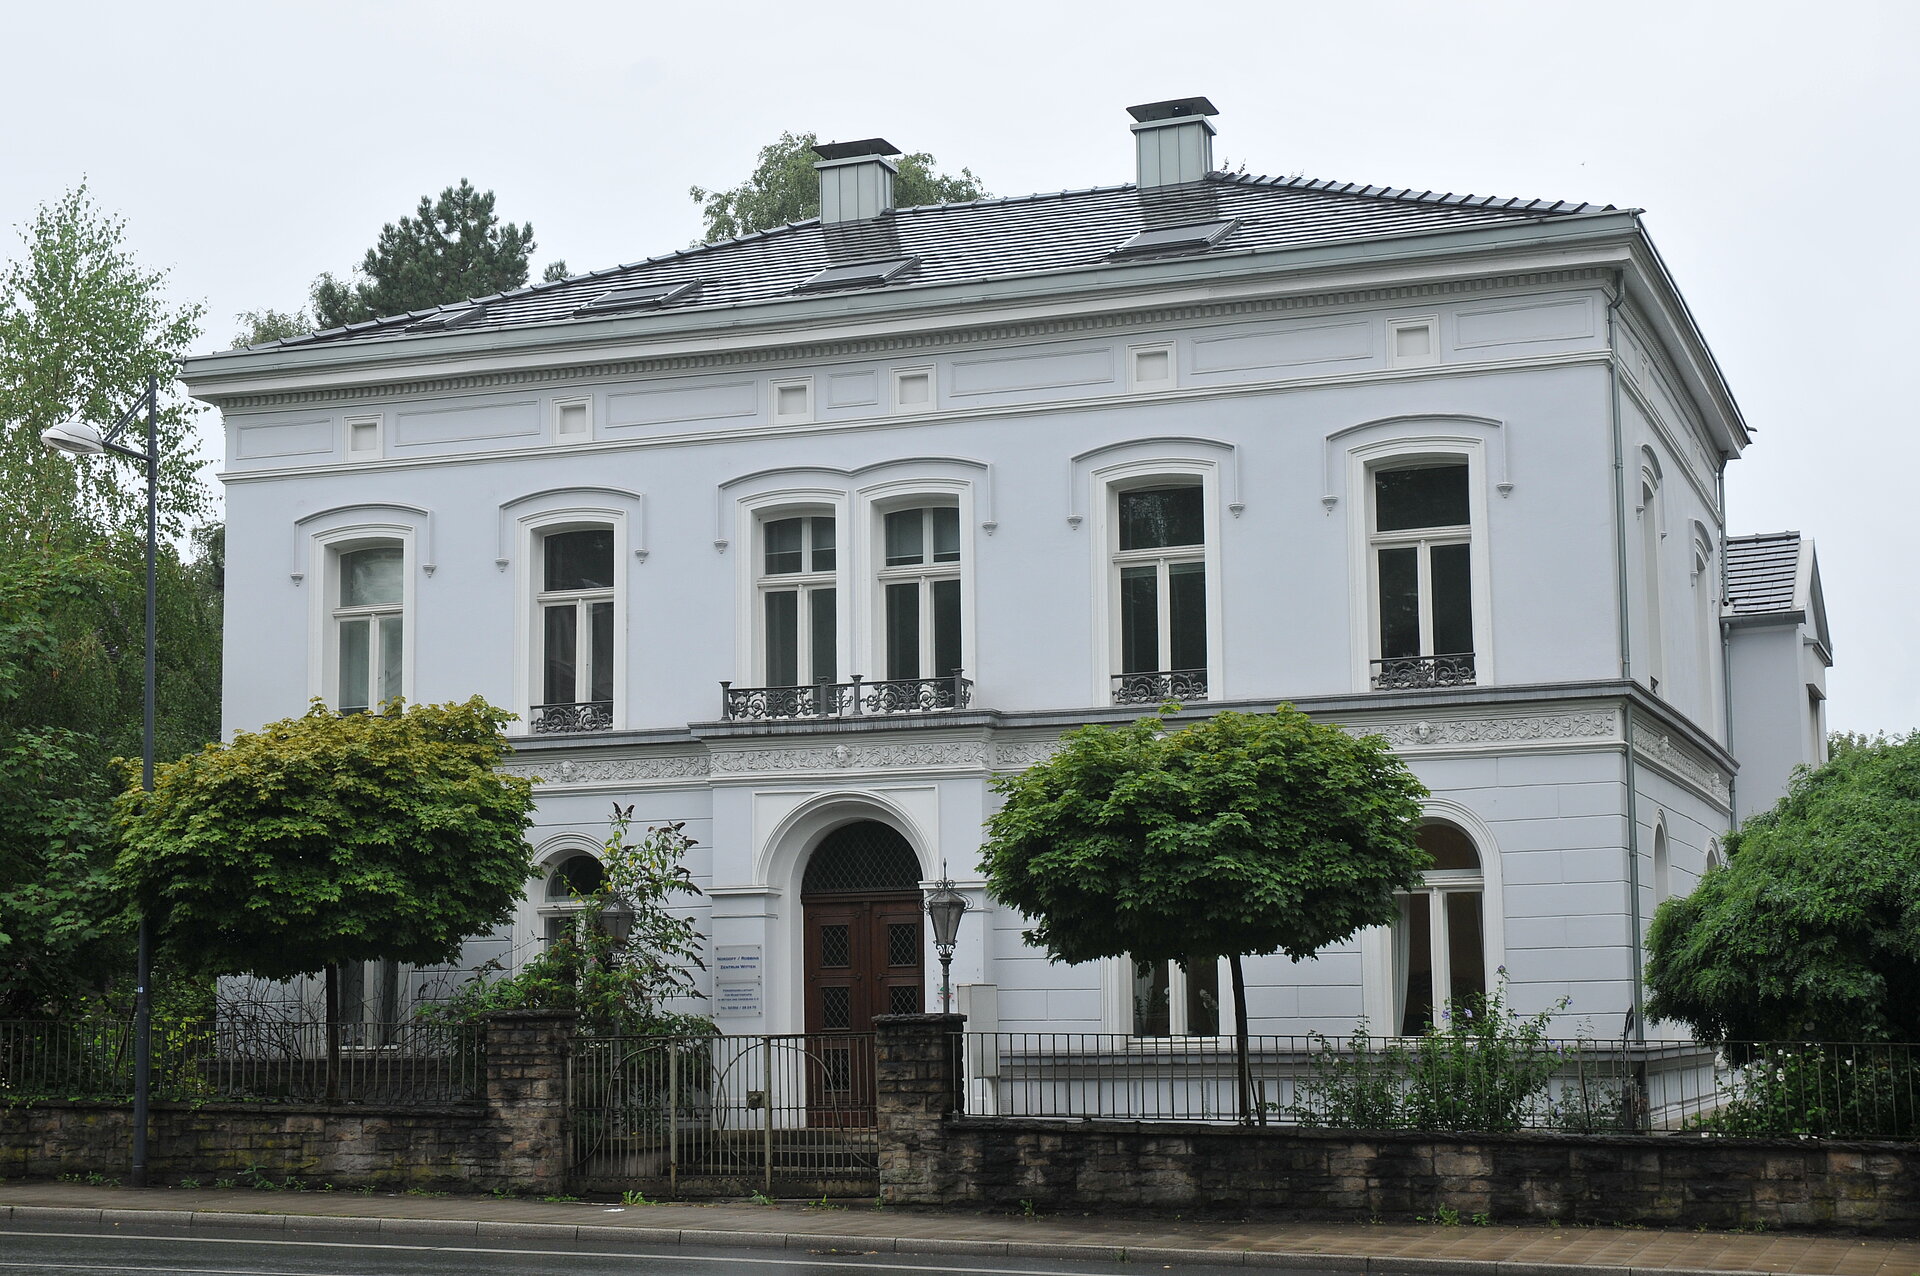 Villa Albert Lohmann in Witten